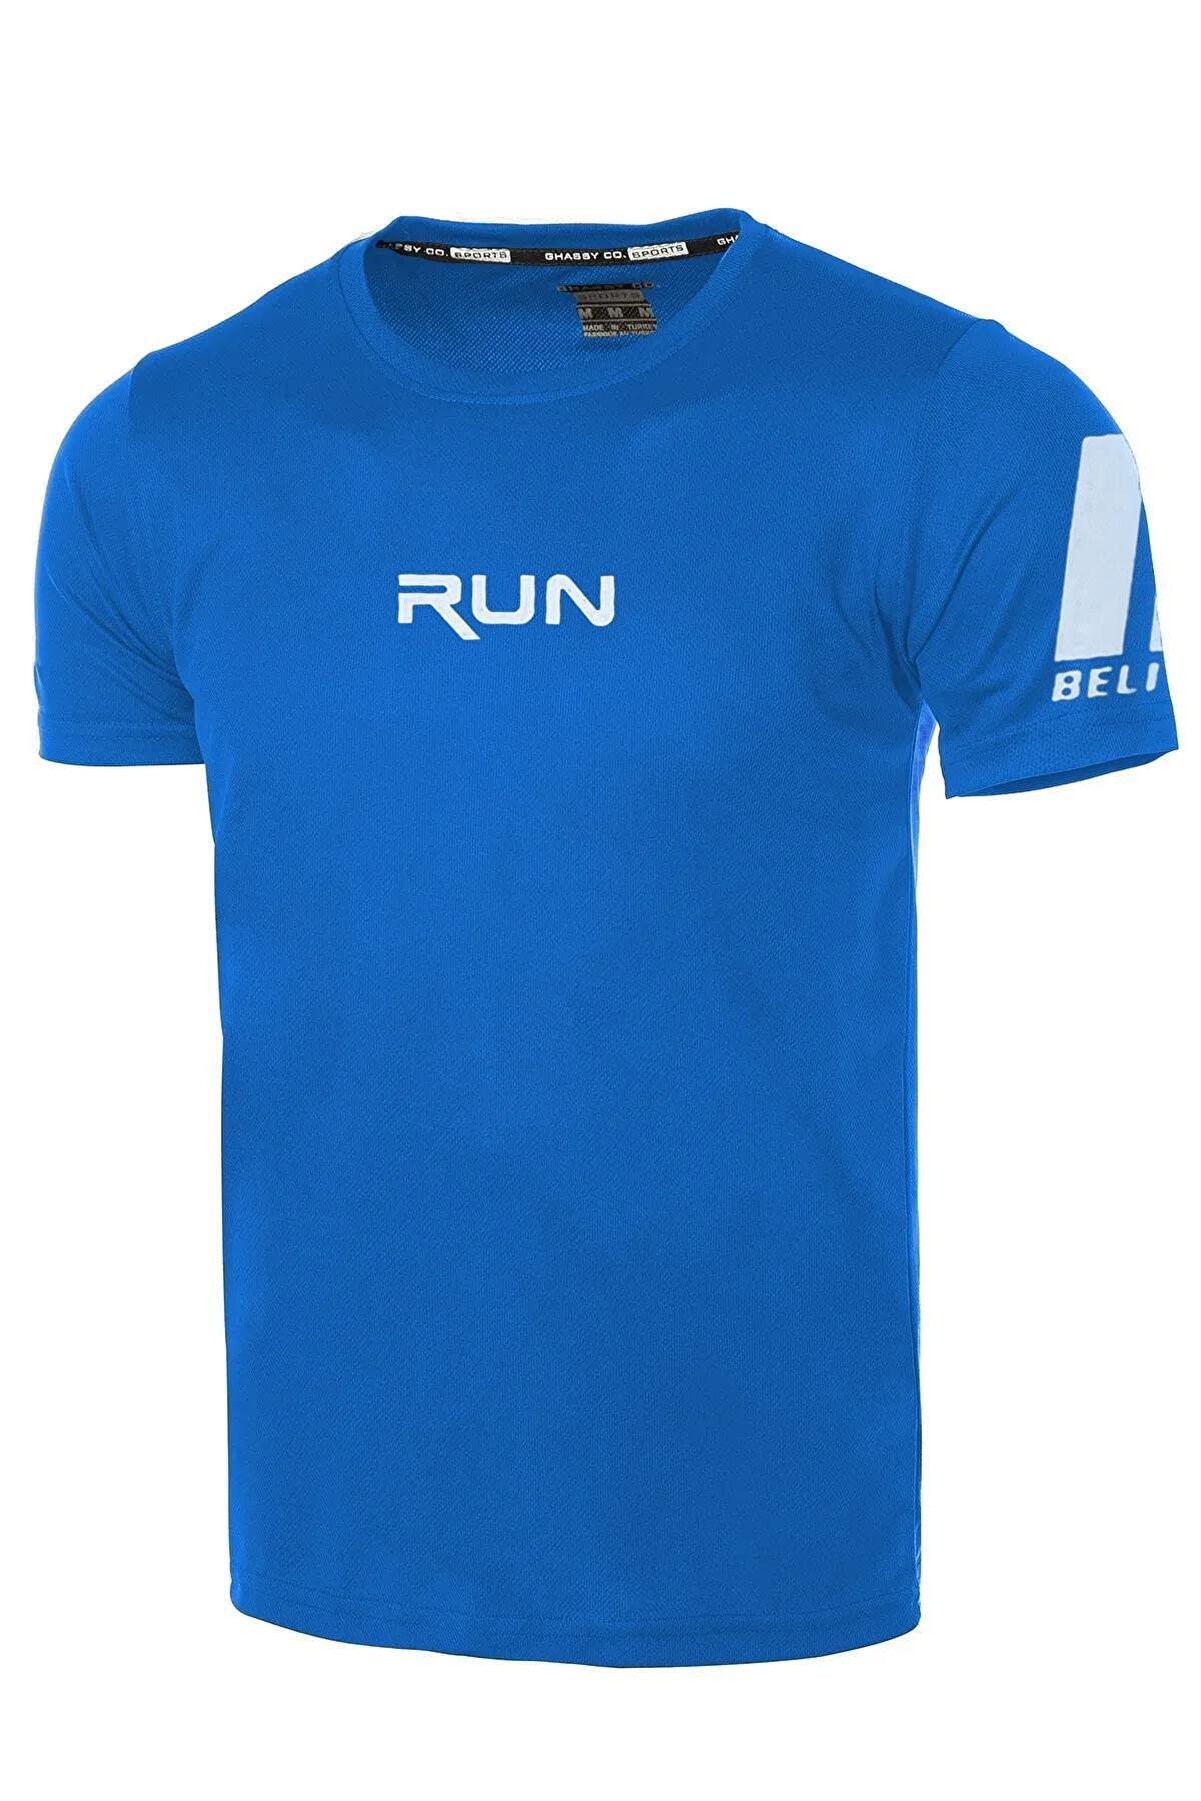 Ghassy Co Ghassy Co. Erkek Nem Emici Hızlı Kuruma Performans Running Spor T-shirt - SAKS